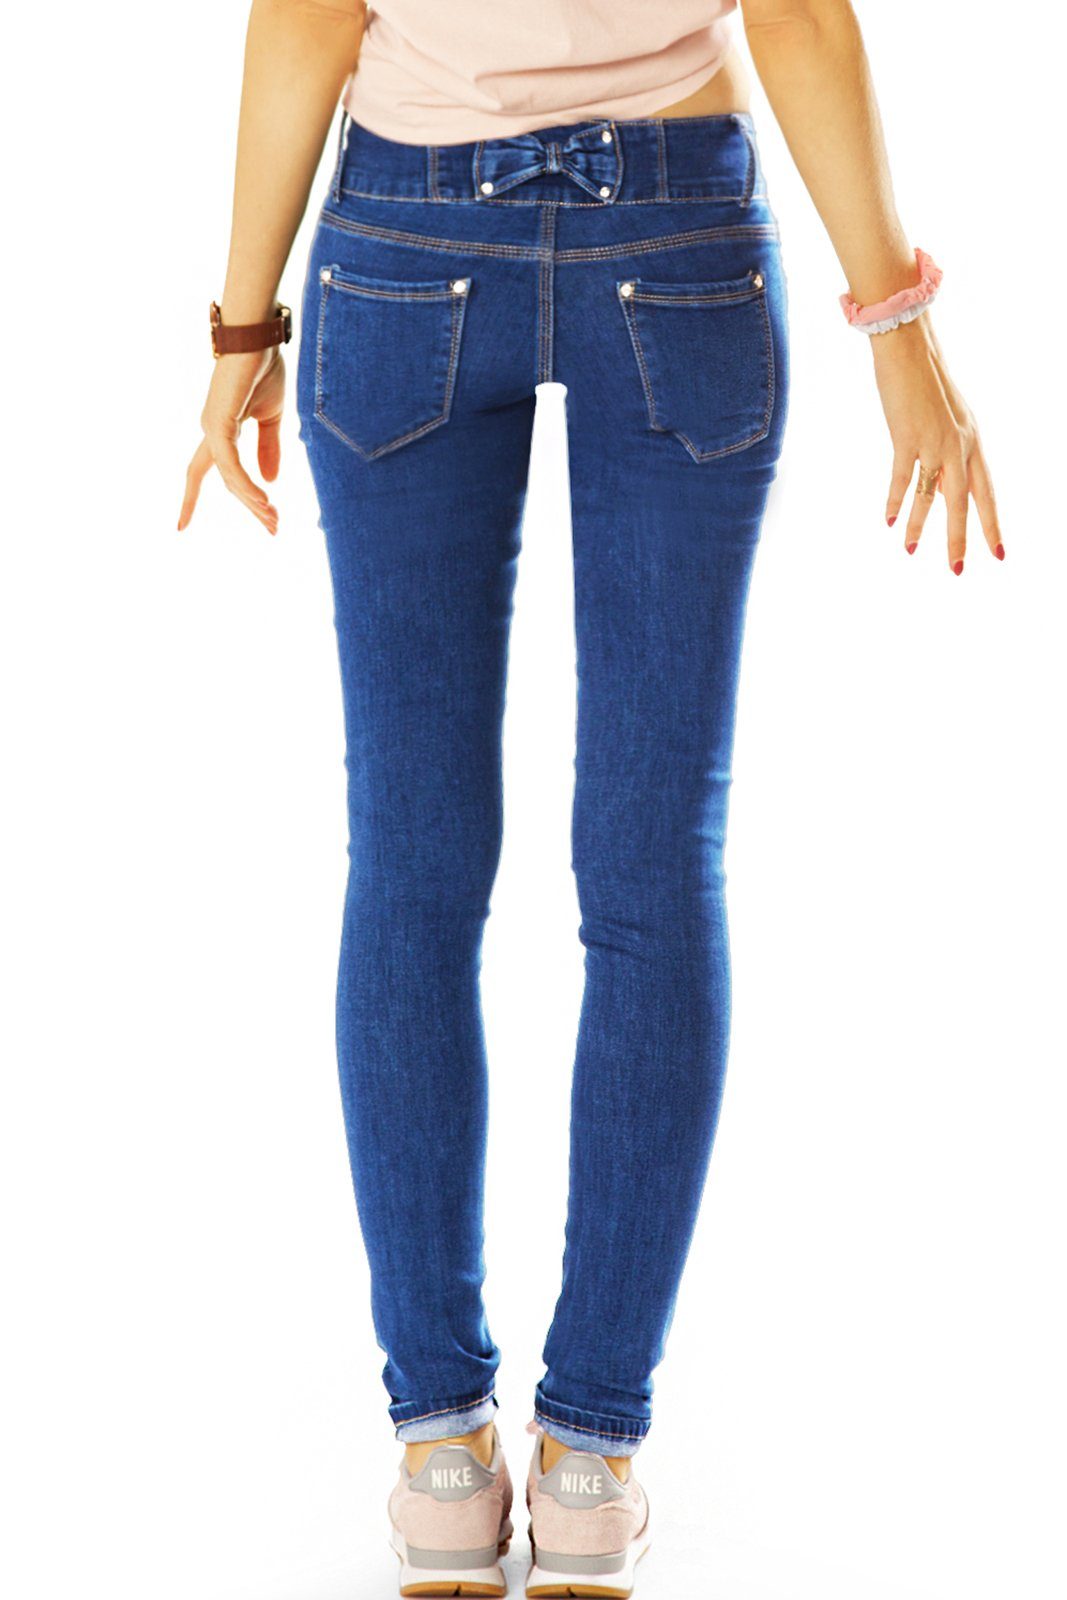 Hose Waist - Hüftjeans styled - Röhrenjeans 5-Pocket-Style Low Low-rise-Jeans be j3e-1 Damen Skinny